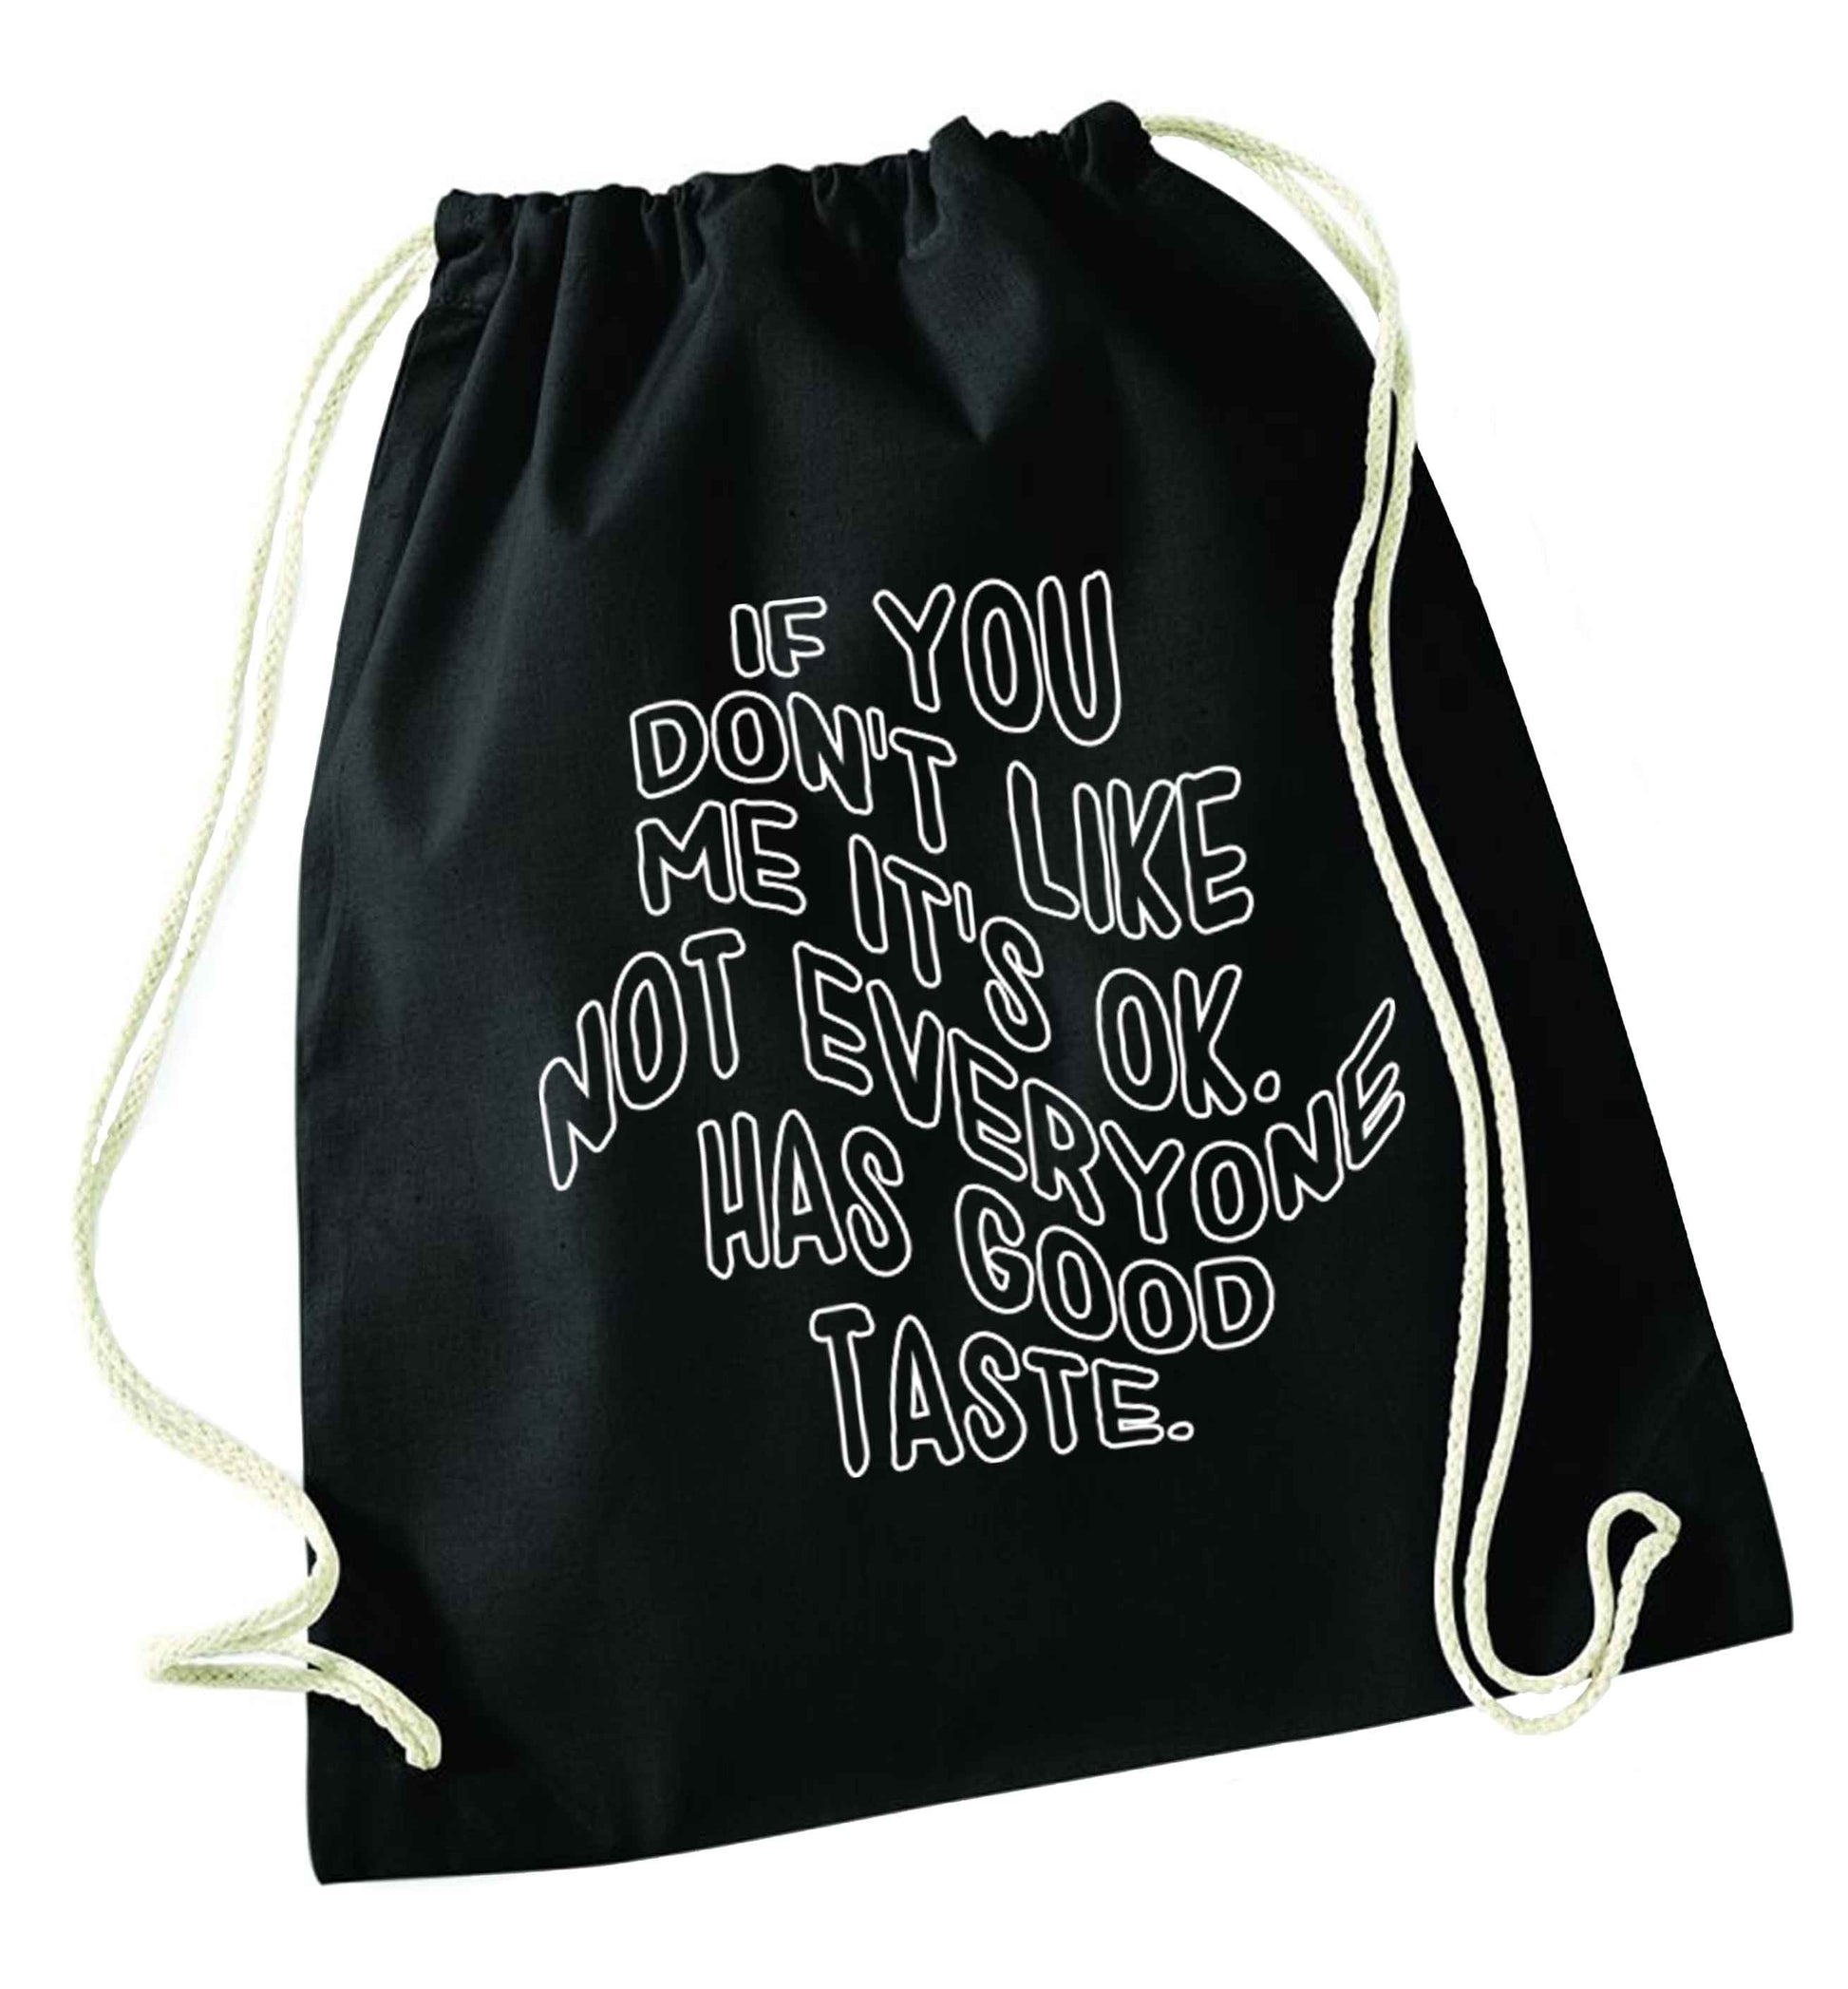 If you don't like me it's ok not everyone has good taste black drawstring bag